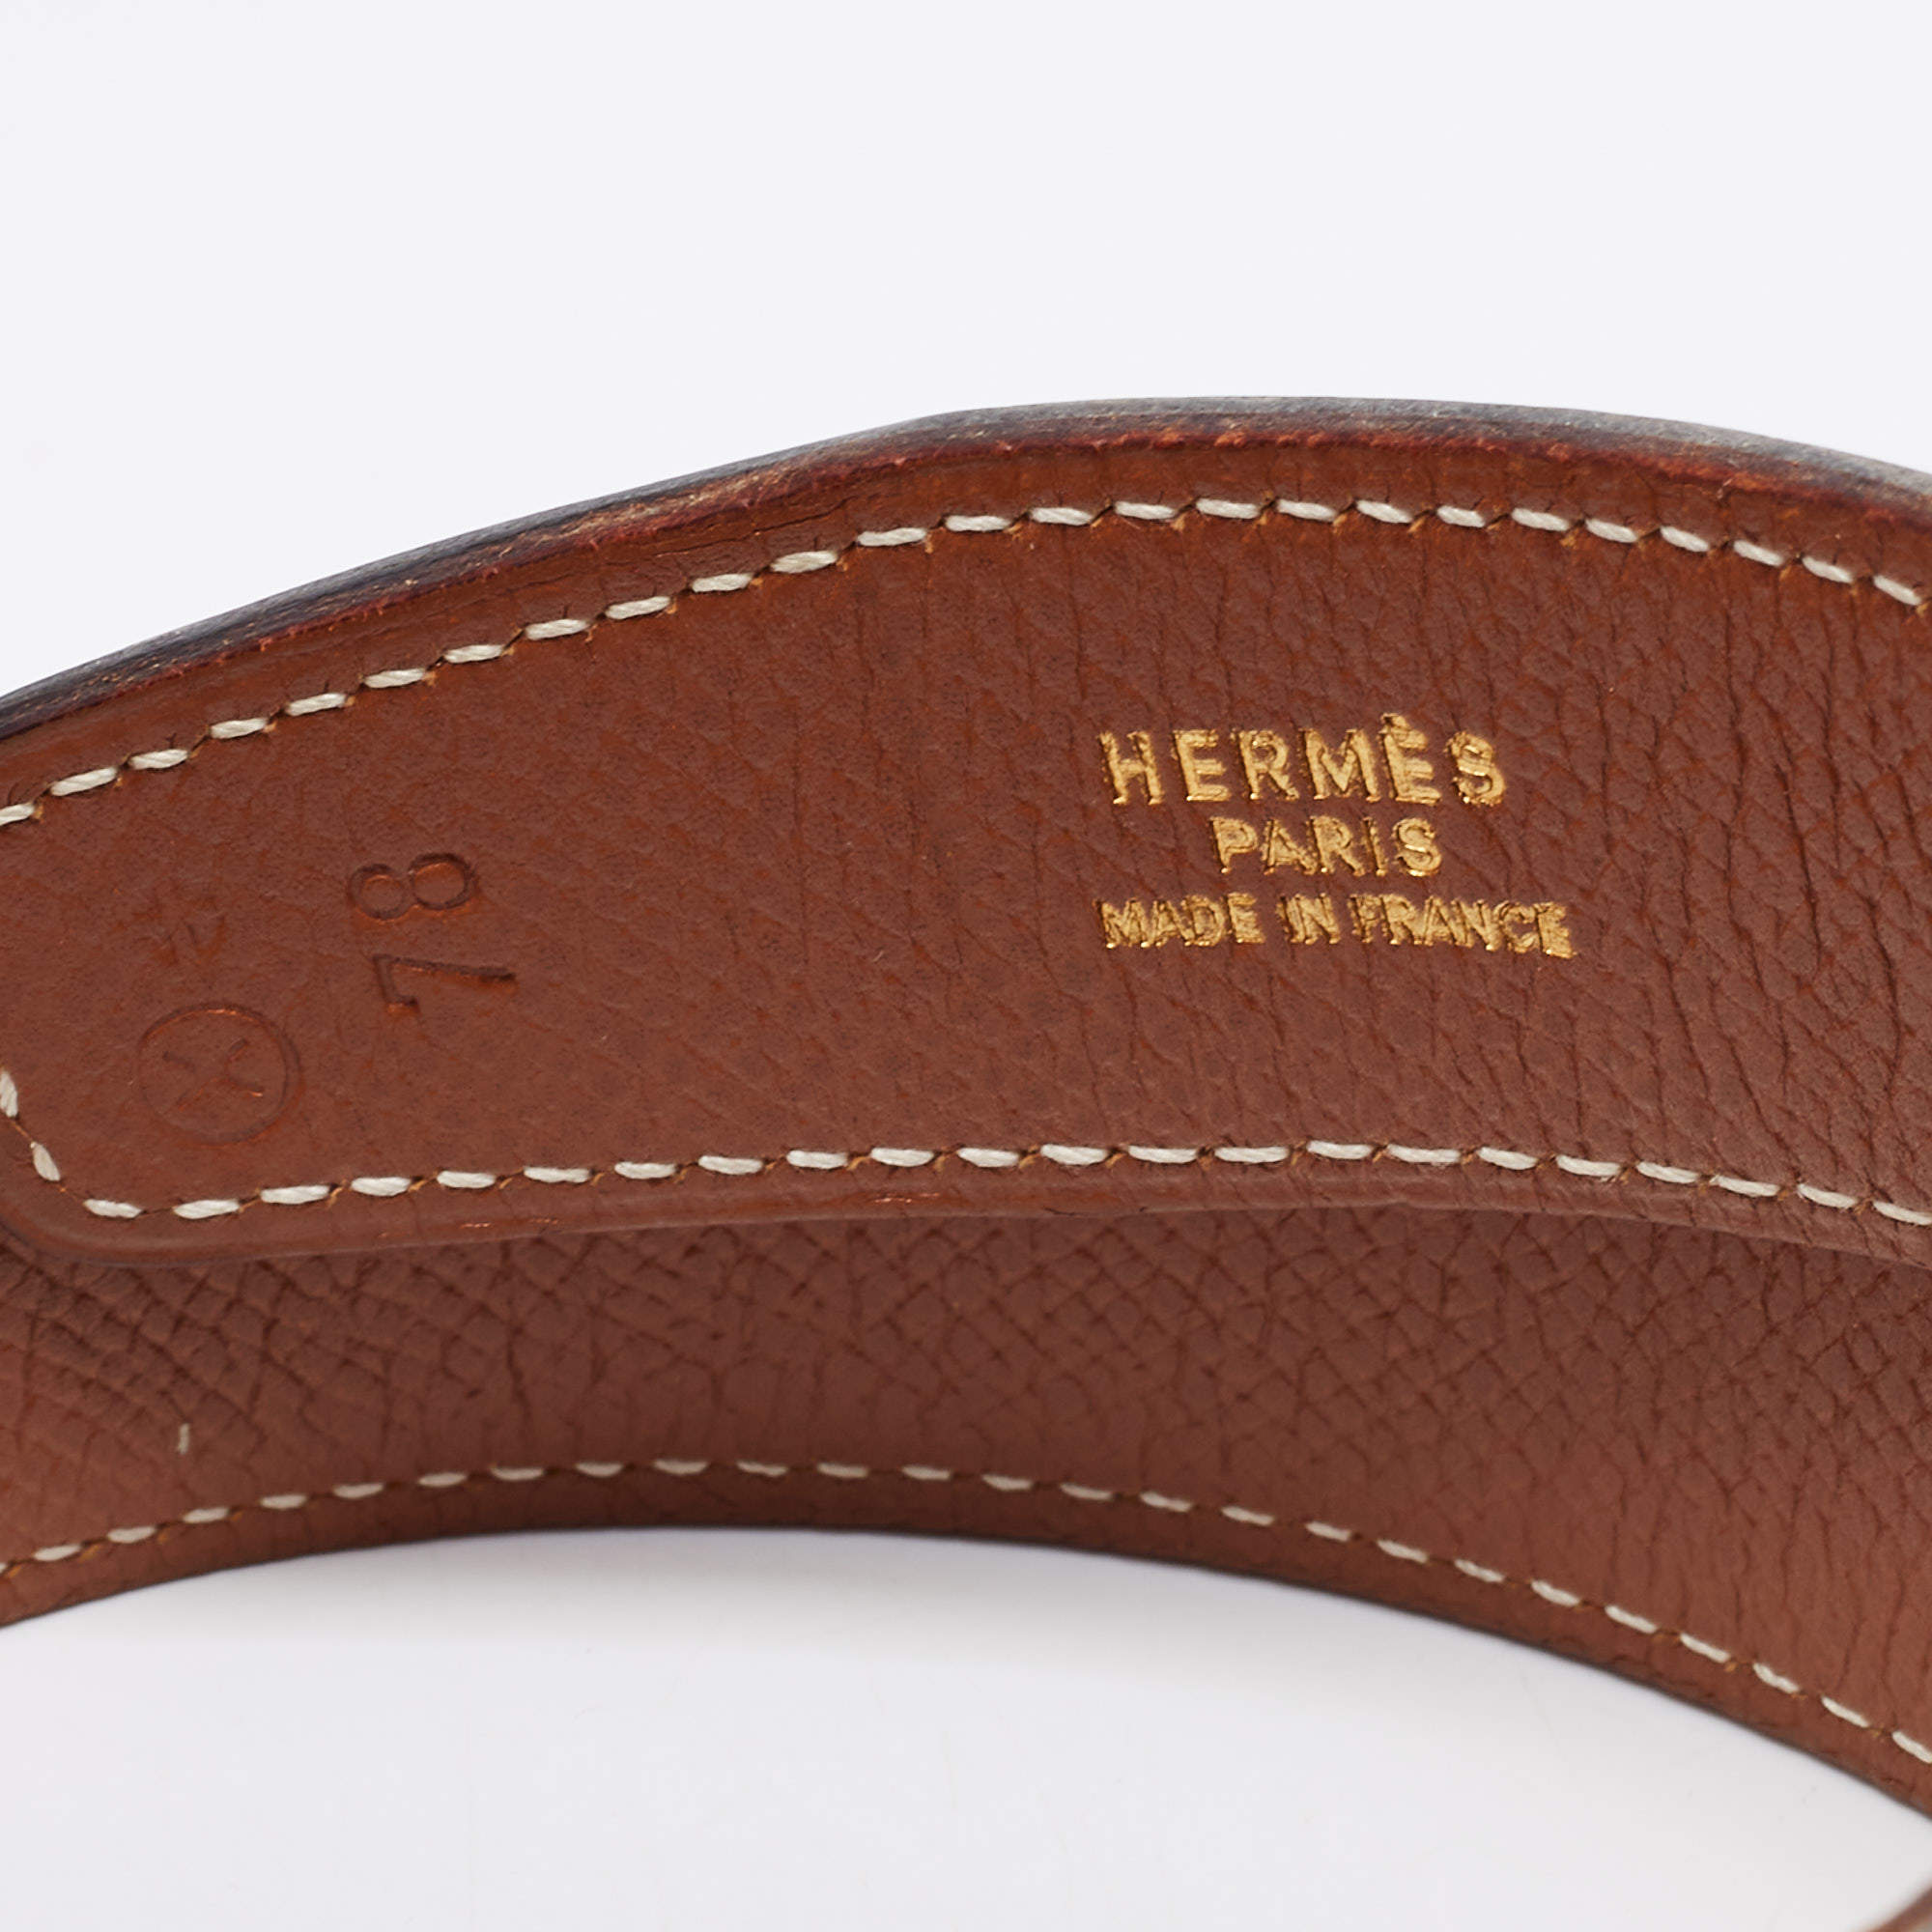 Hermès Kelly Belt Bag Courchevel Gold